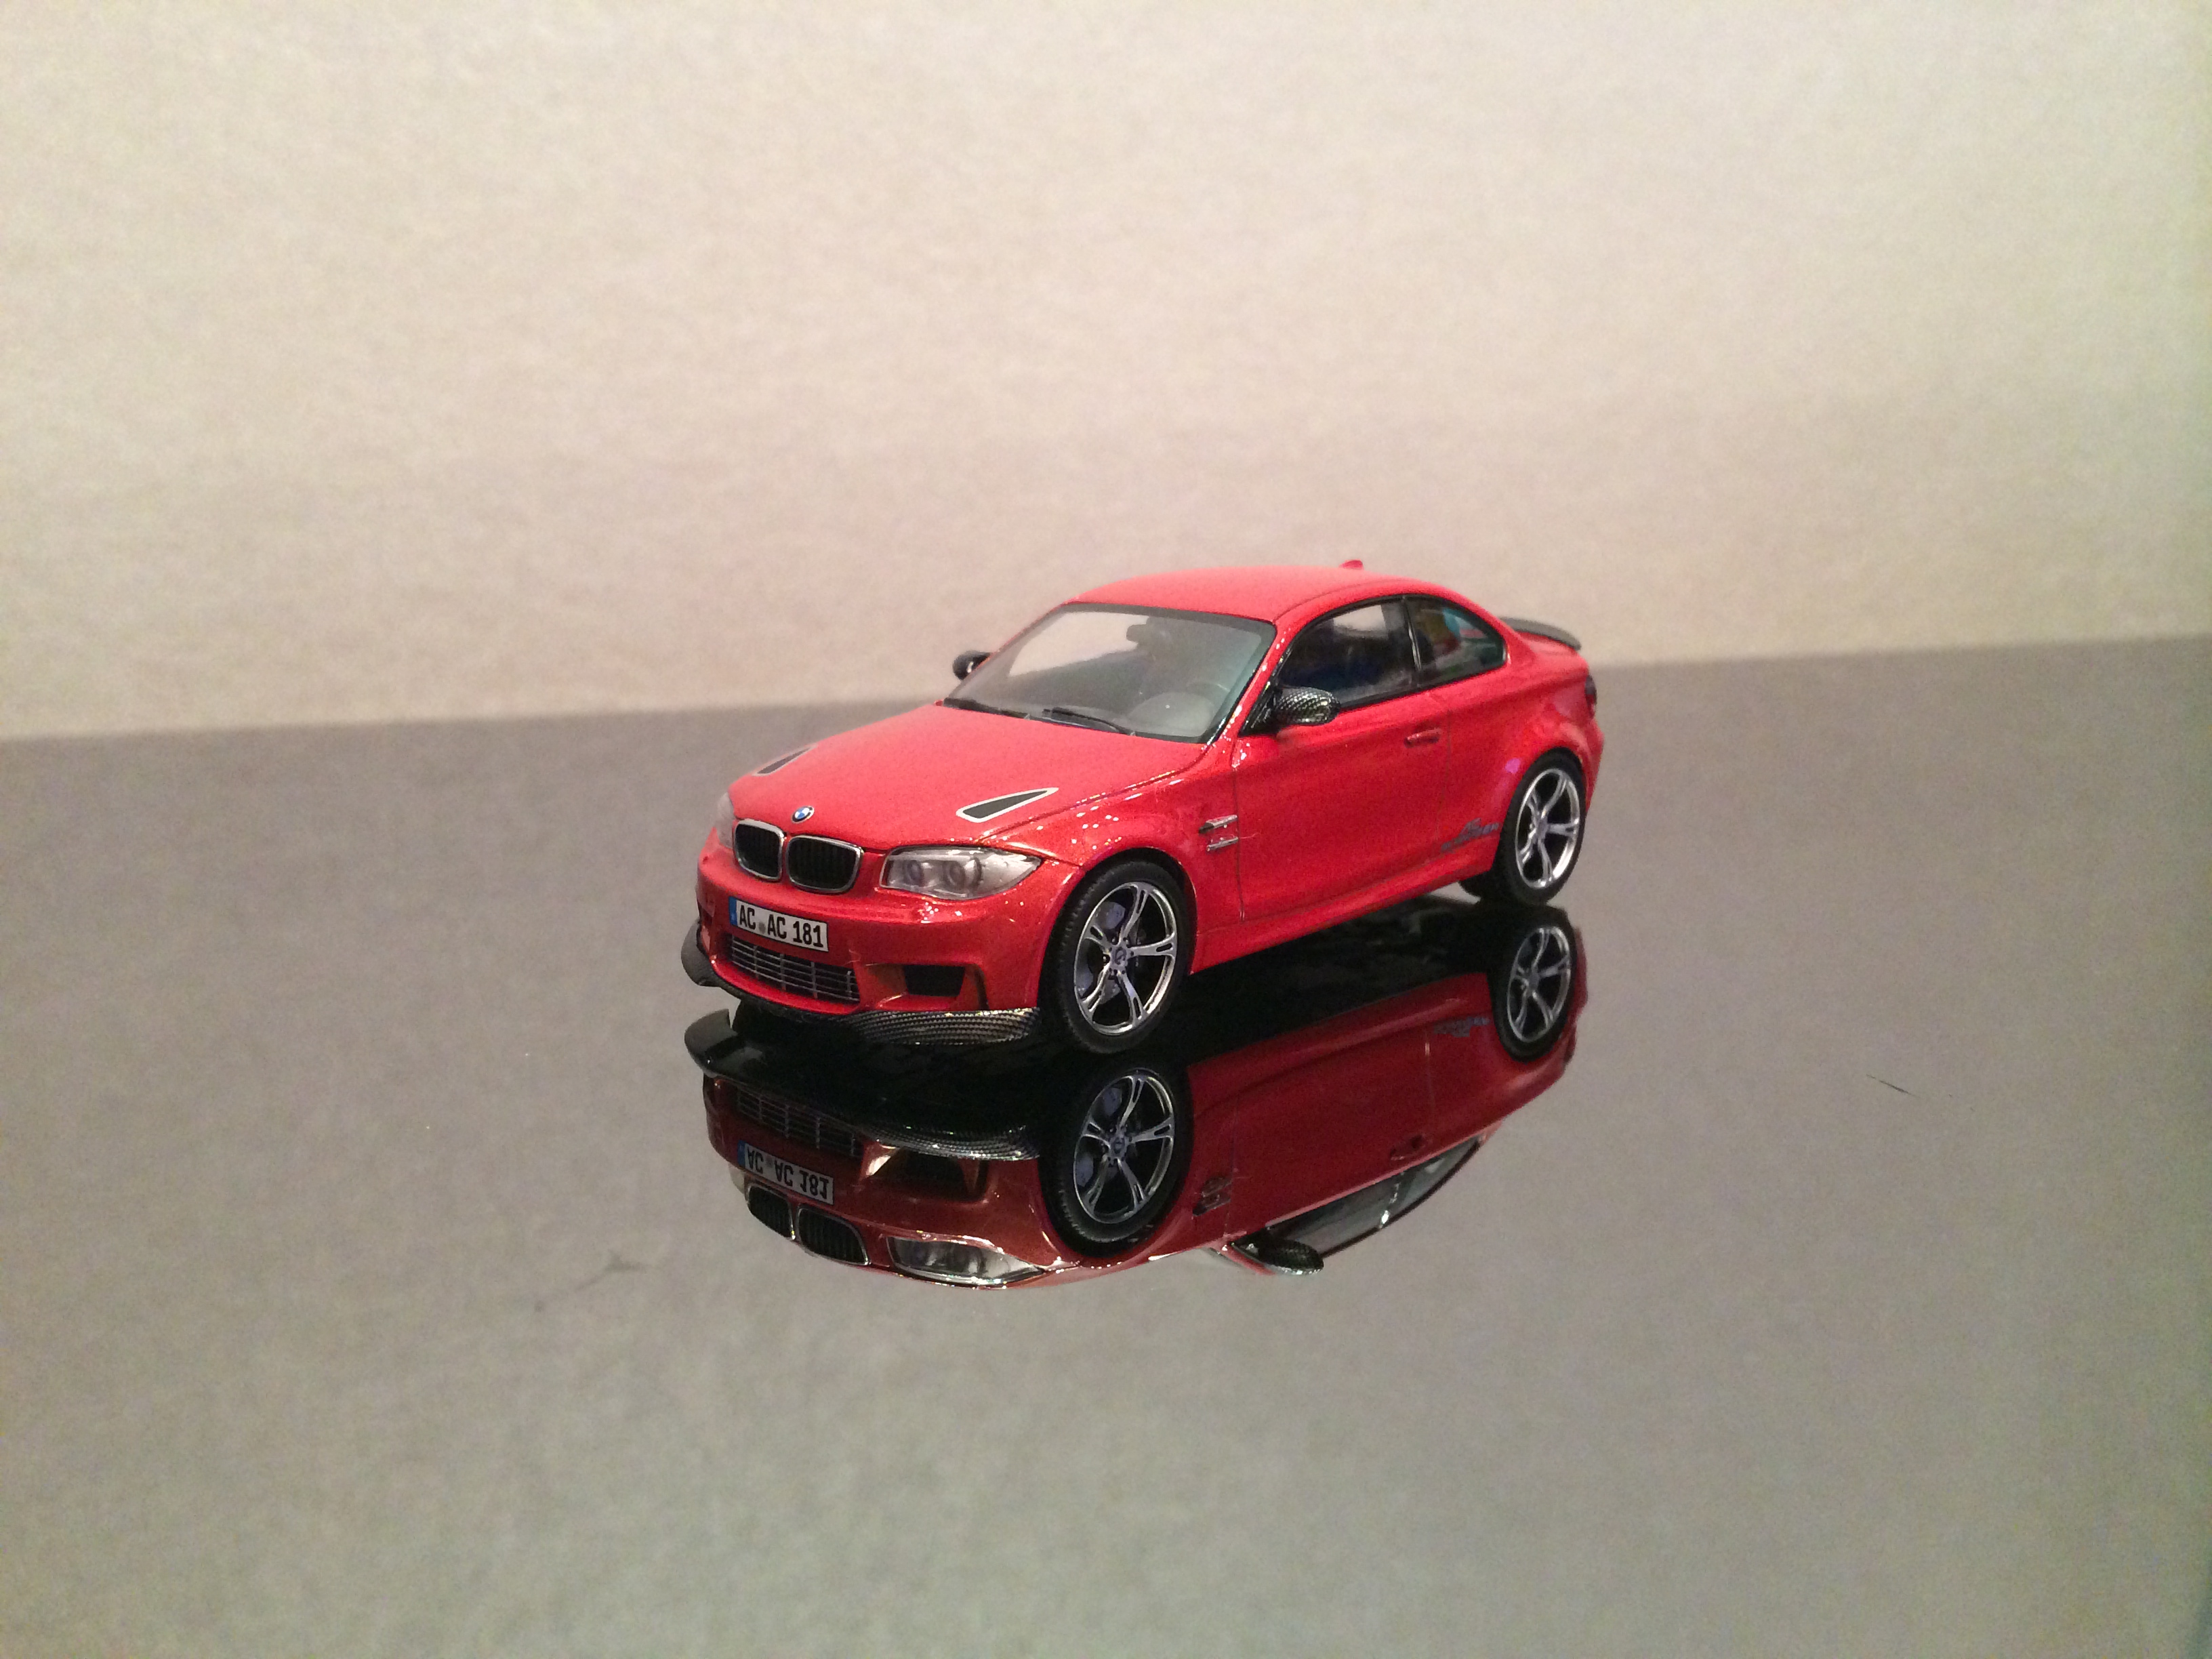 BMW 1M coupe (E82) ACS 1 Sport, valencia orange, le 1 of 528pcs. (minichamps)